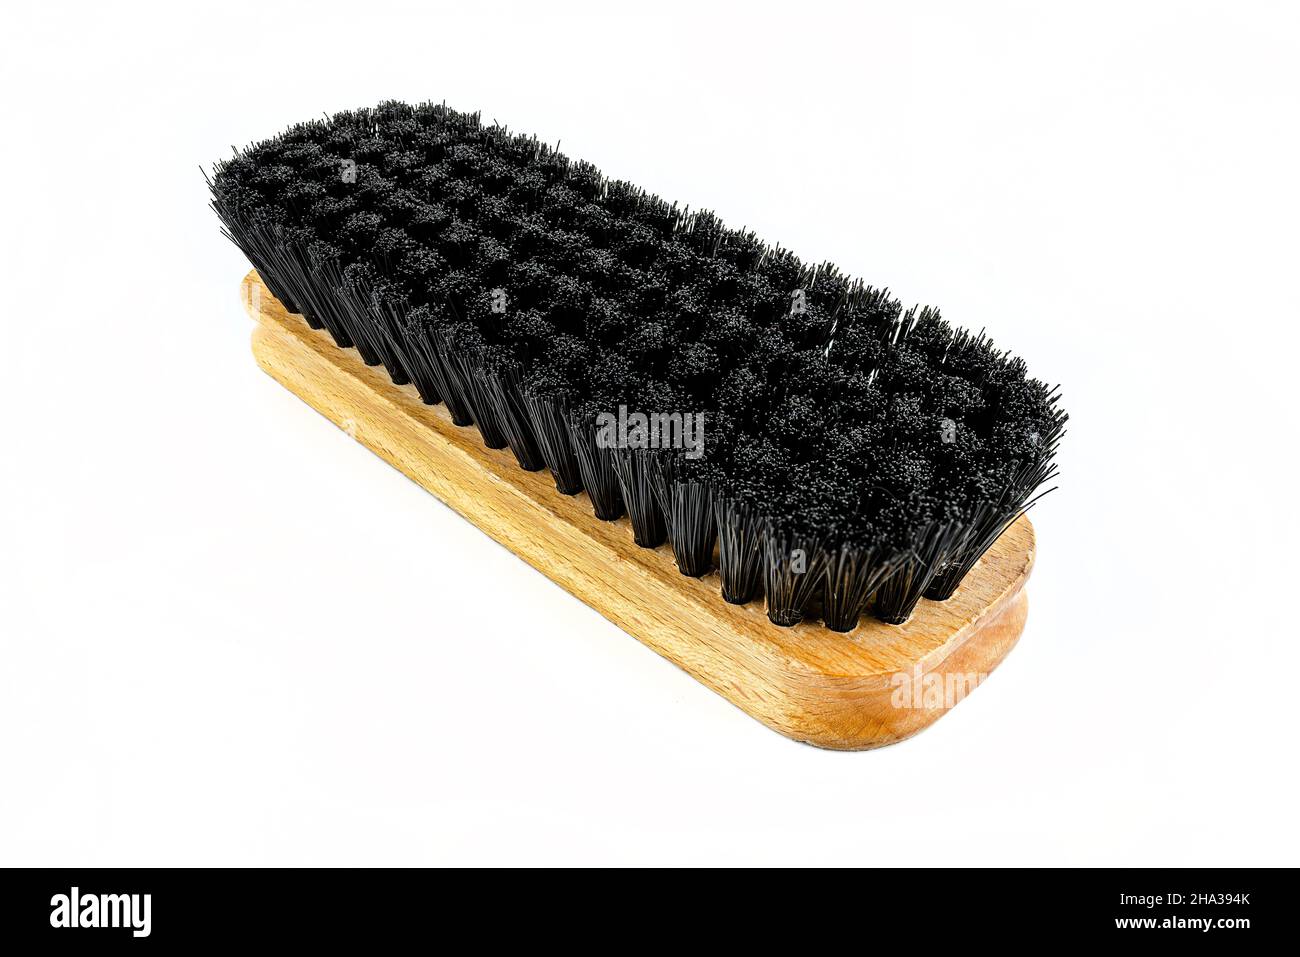 Macro photo of a wooden black bristle shoe brush, isolated on a white background. Stock Photo